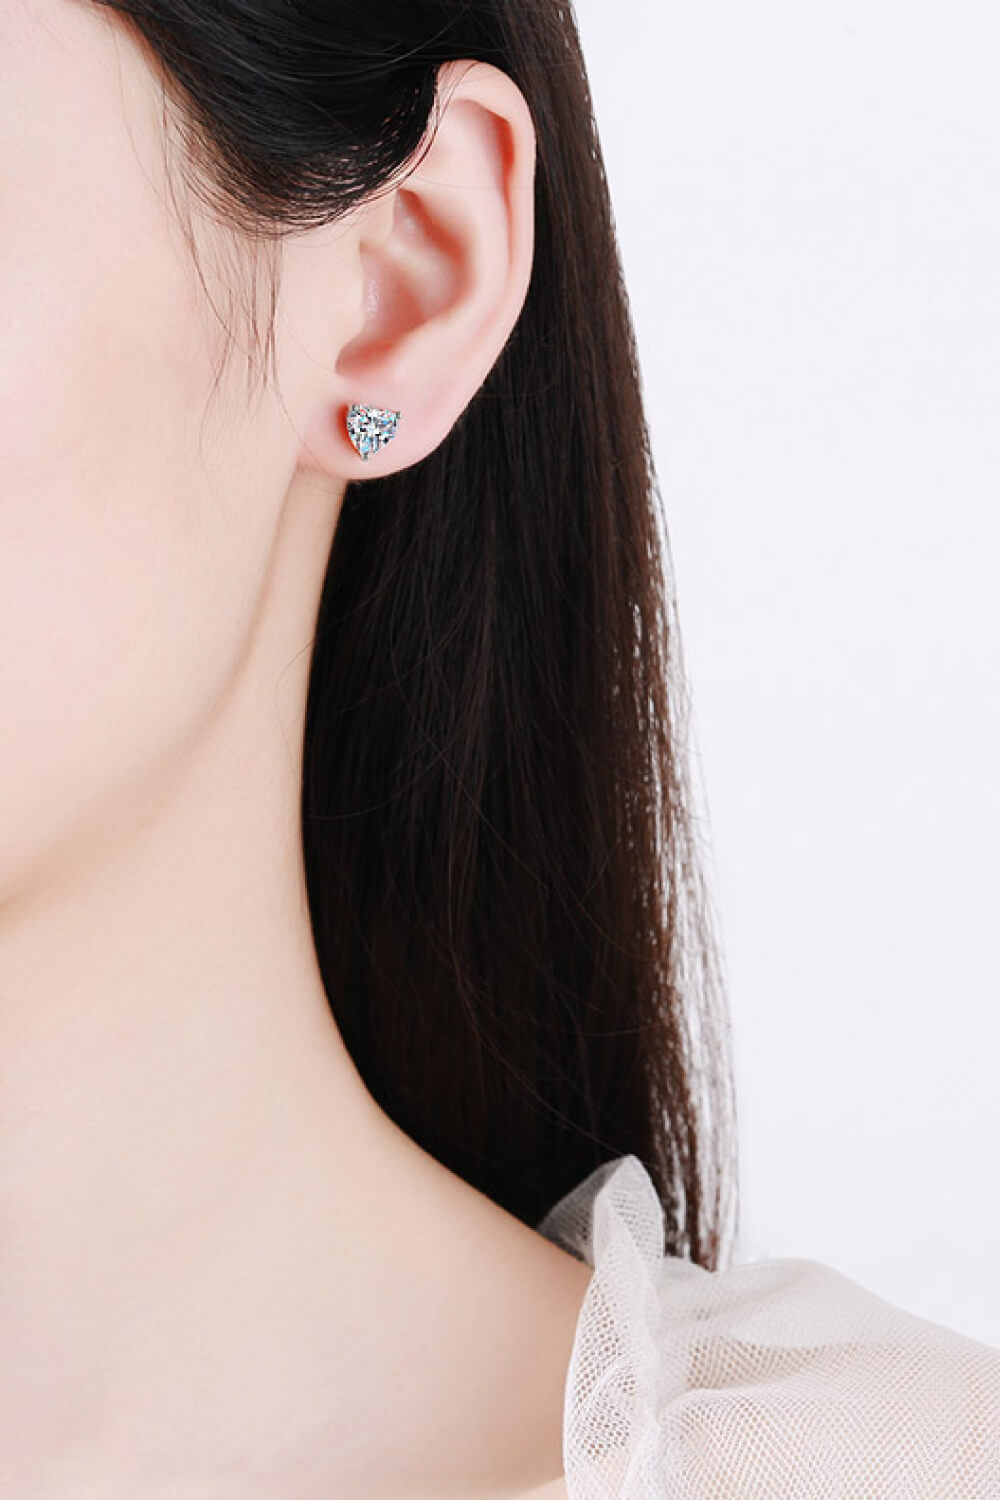 2 Carat Moissanite Heart-Shaped Stud Earrings